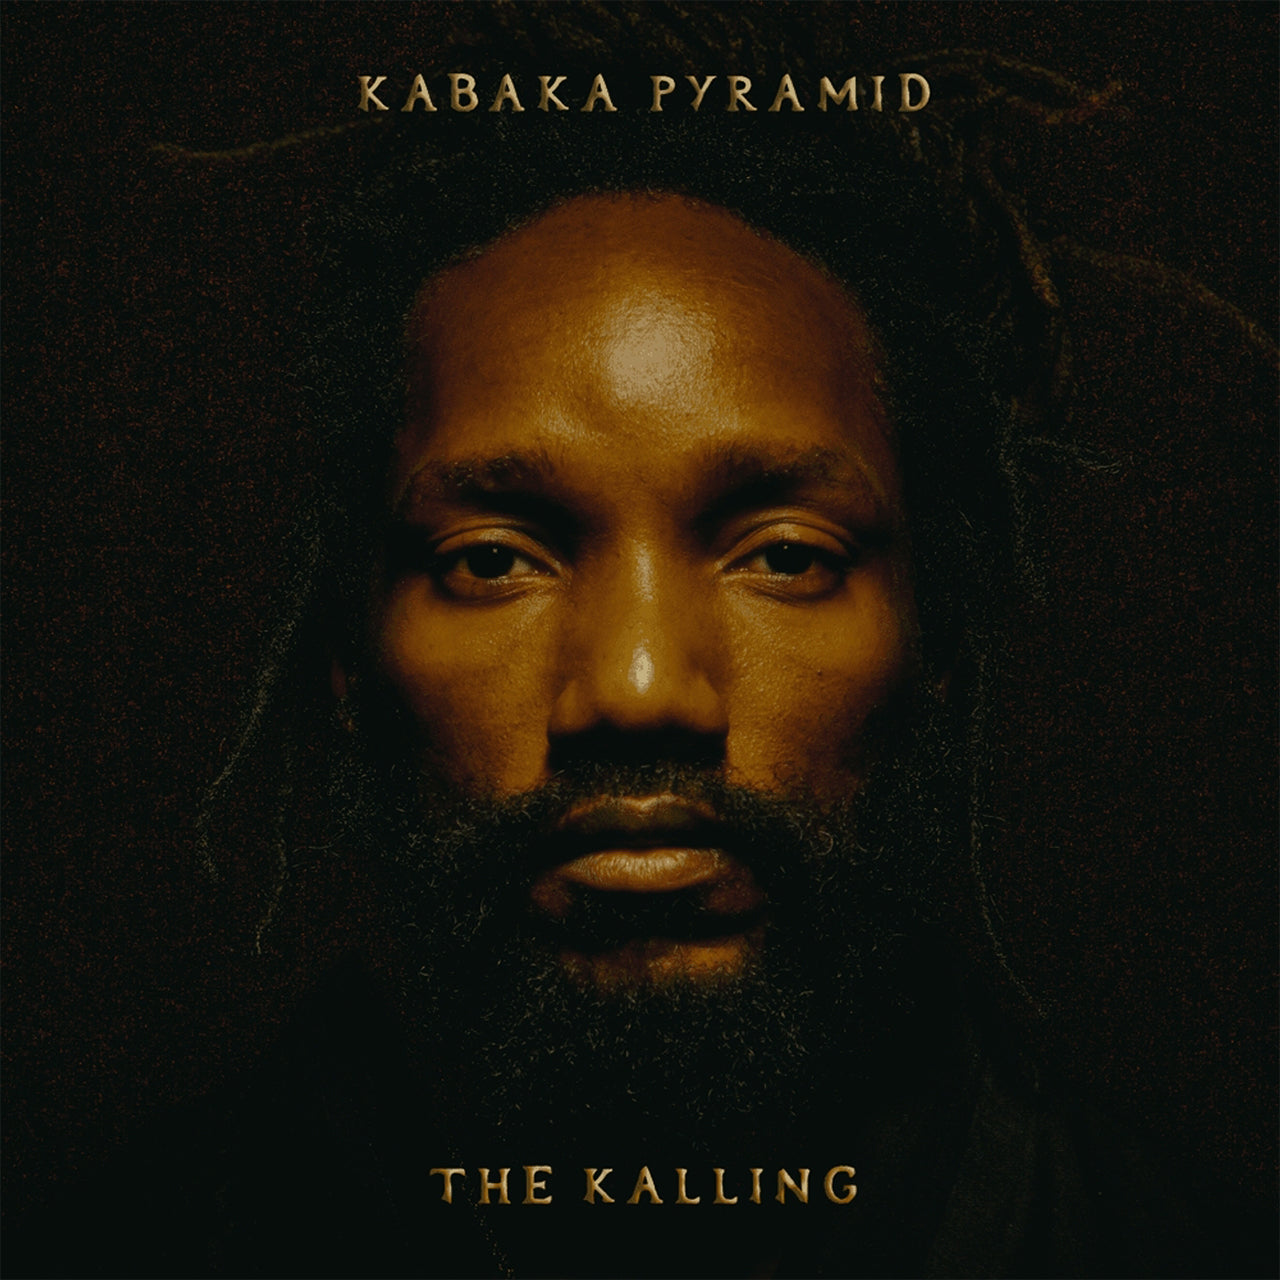 KABAKA PYRAMID - The Kalling - 2LP - Vinyl